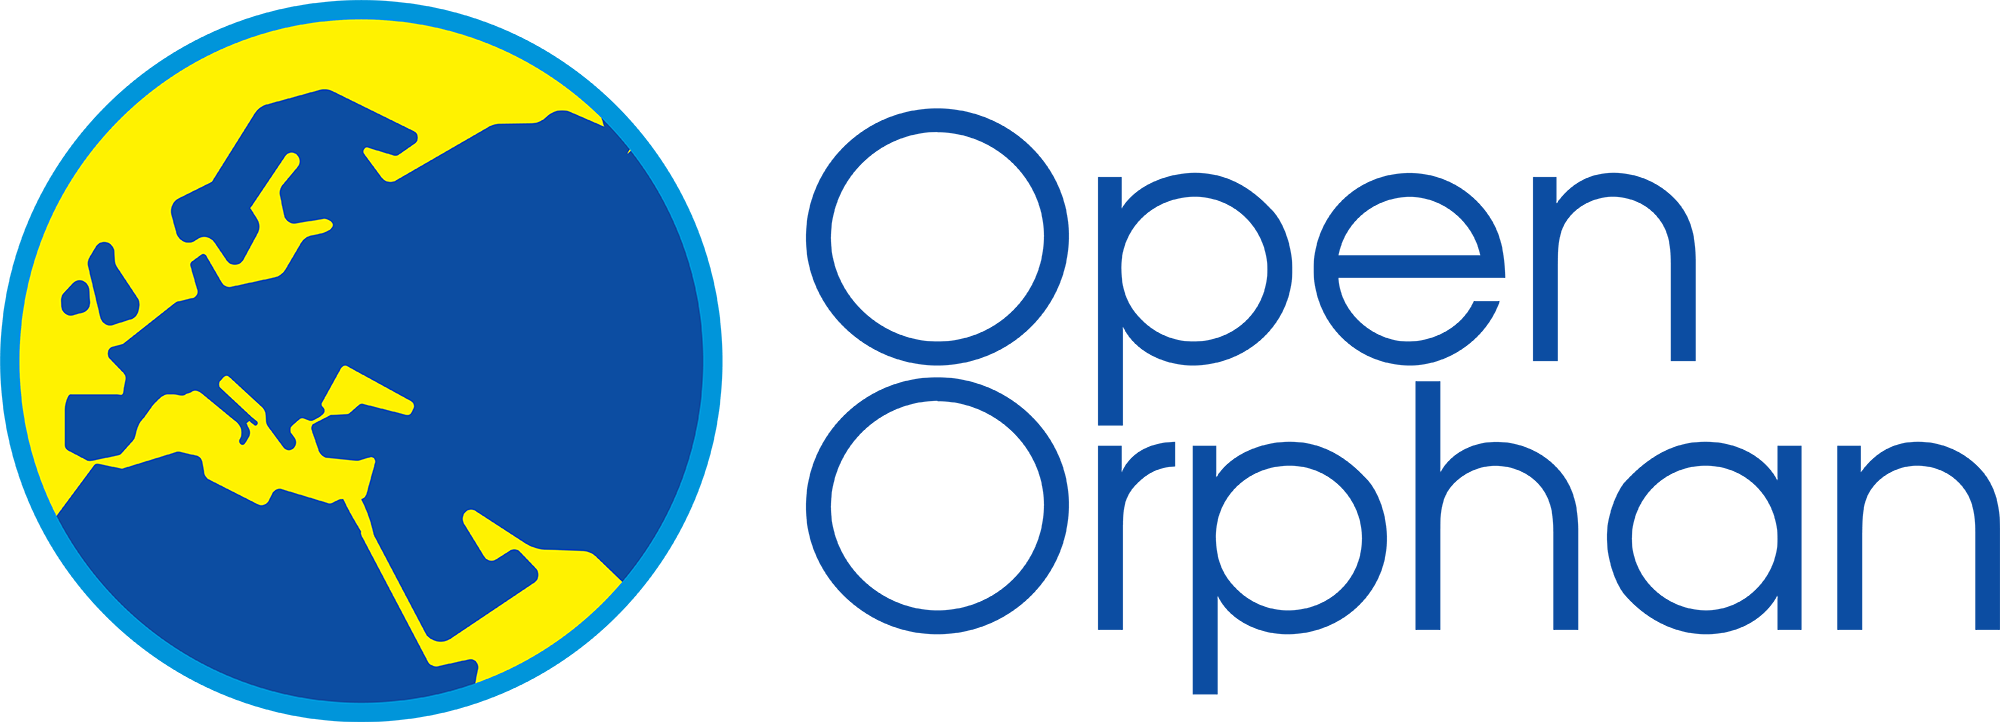 Open Orphan plc